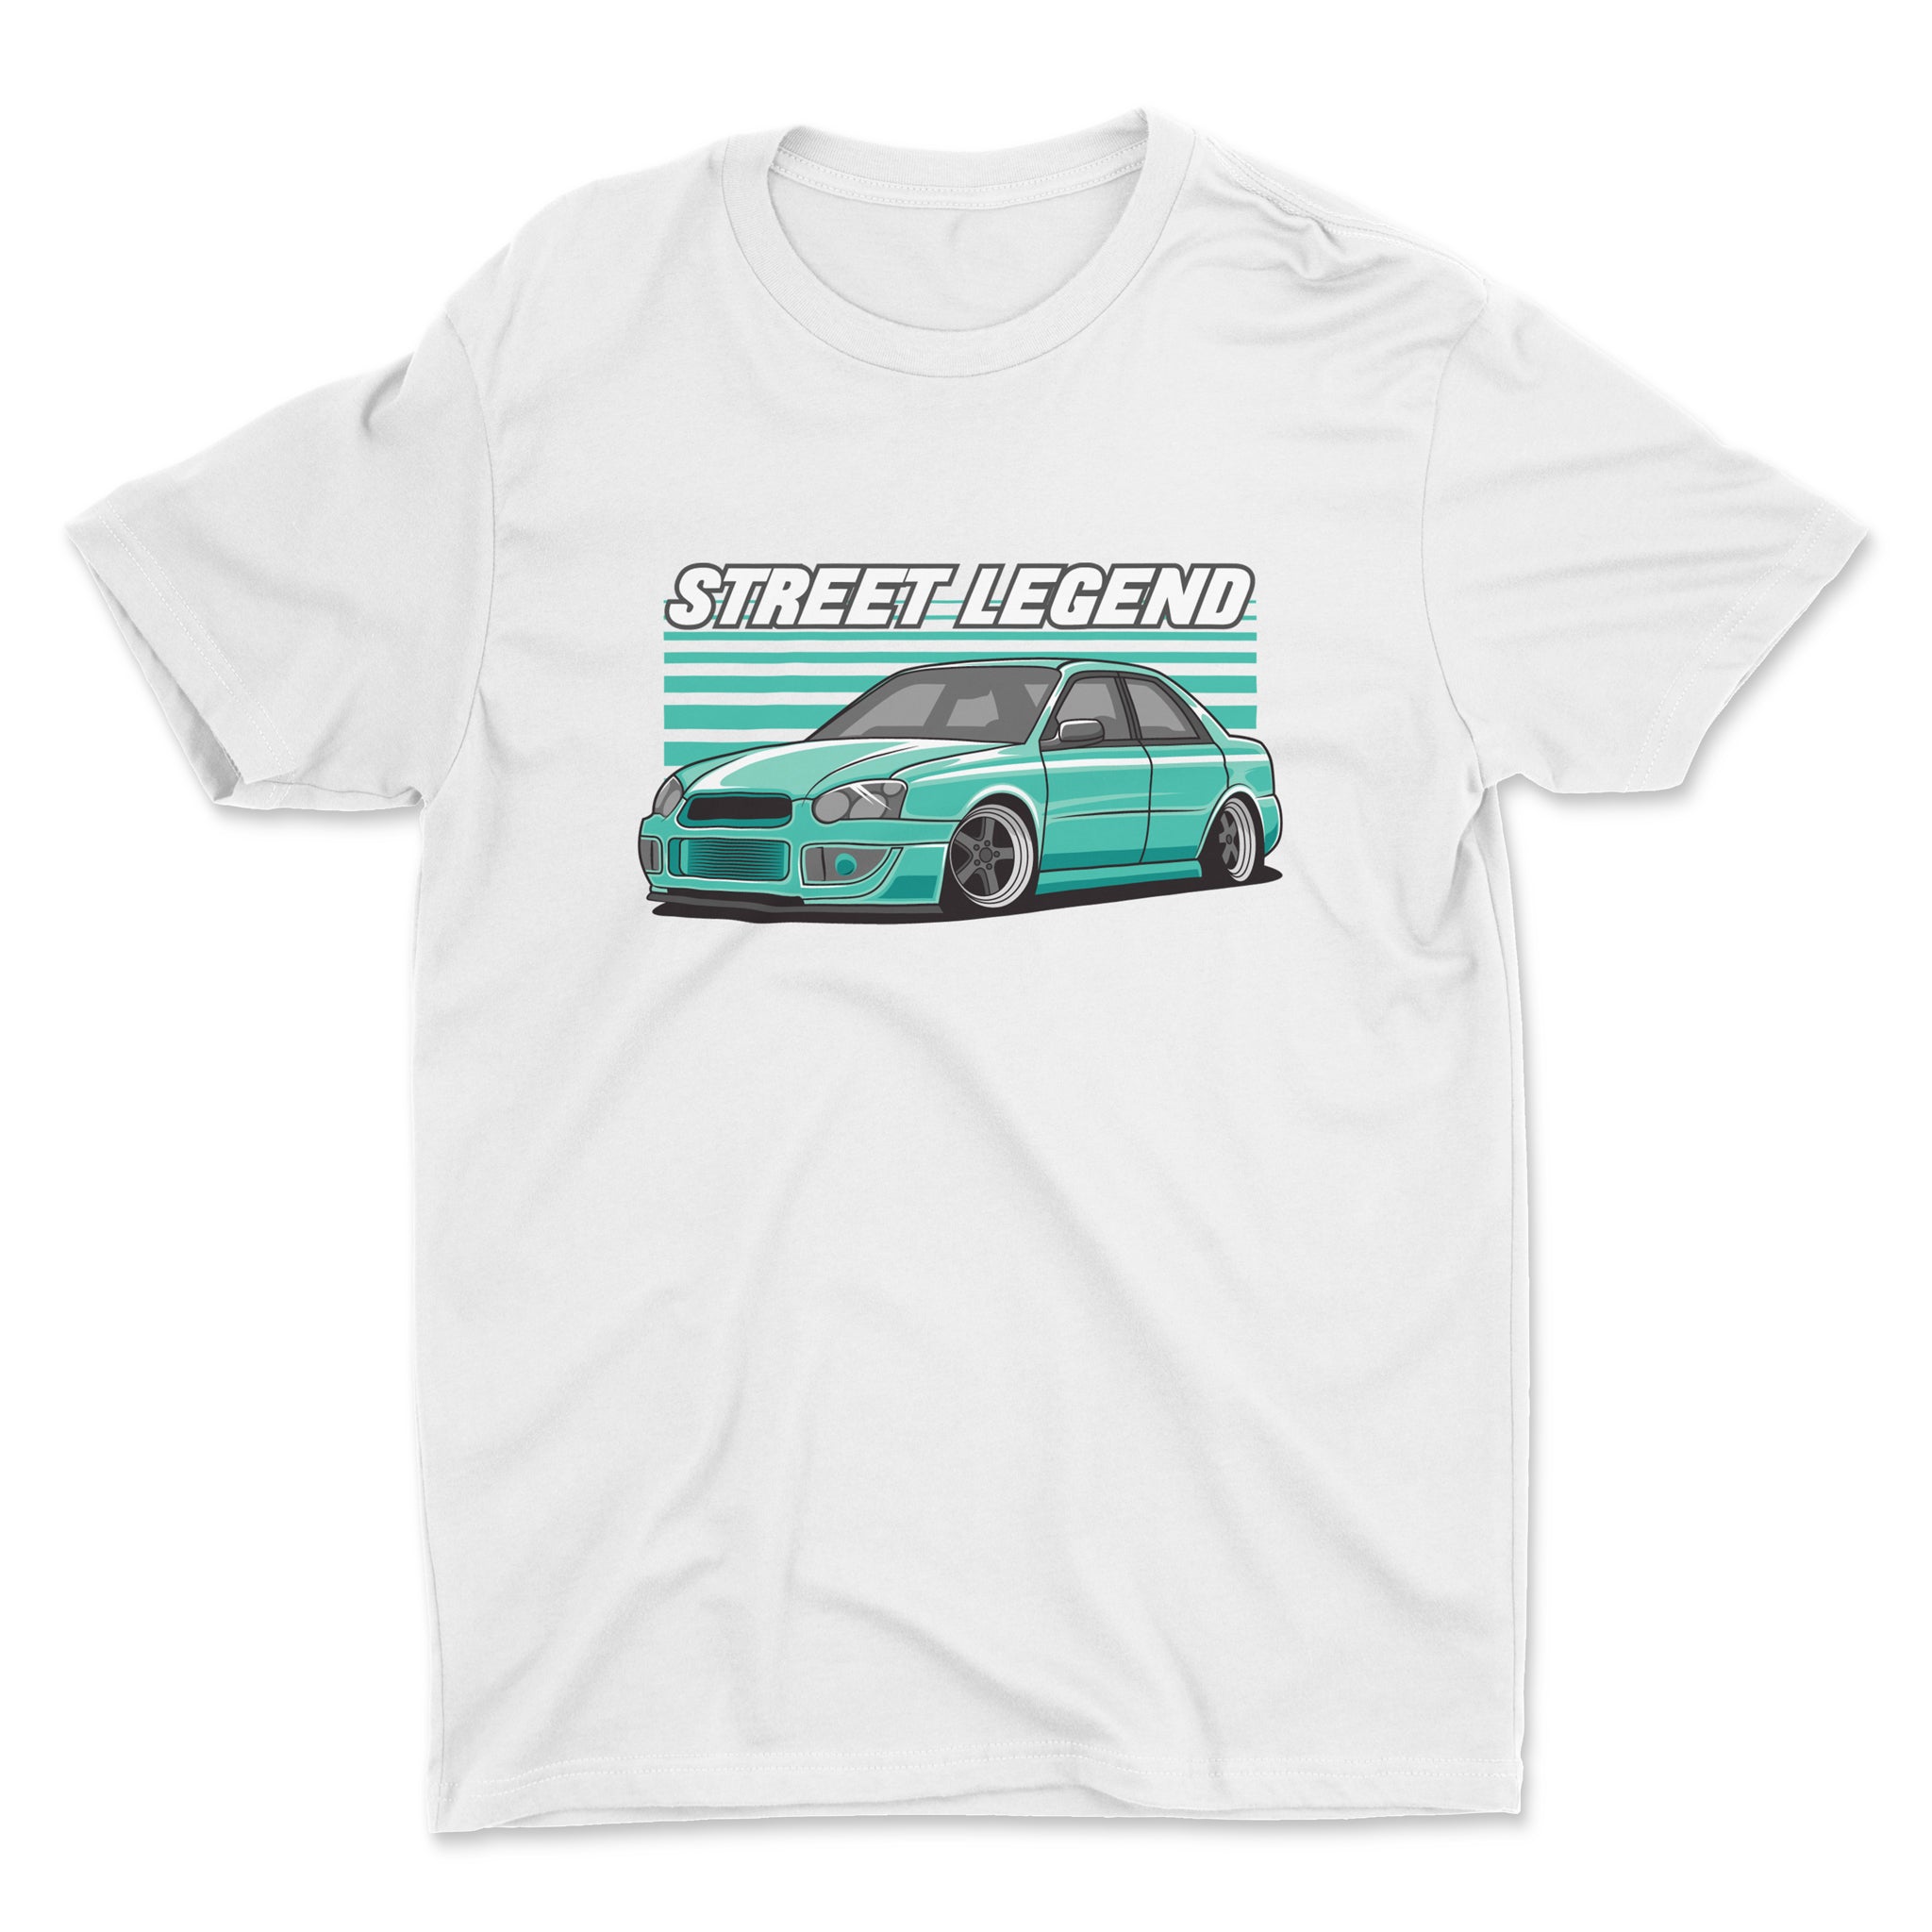 Street Legend - Car T-Shirt - White.